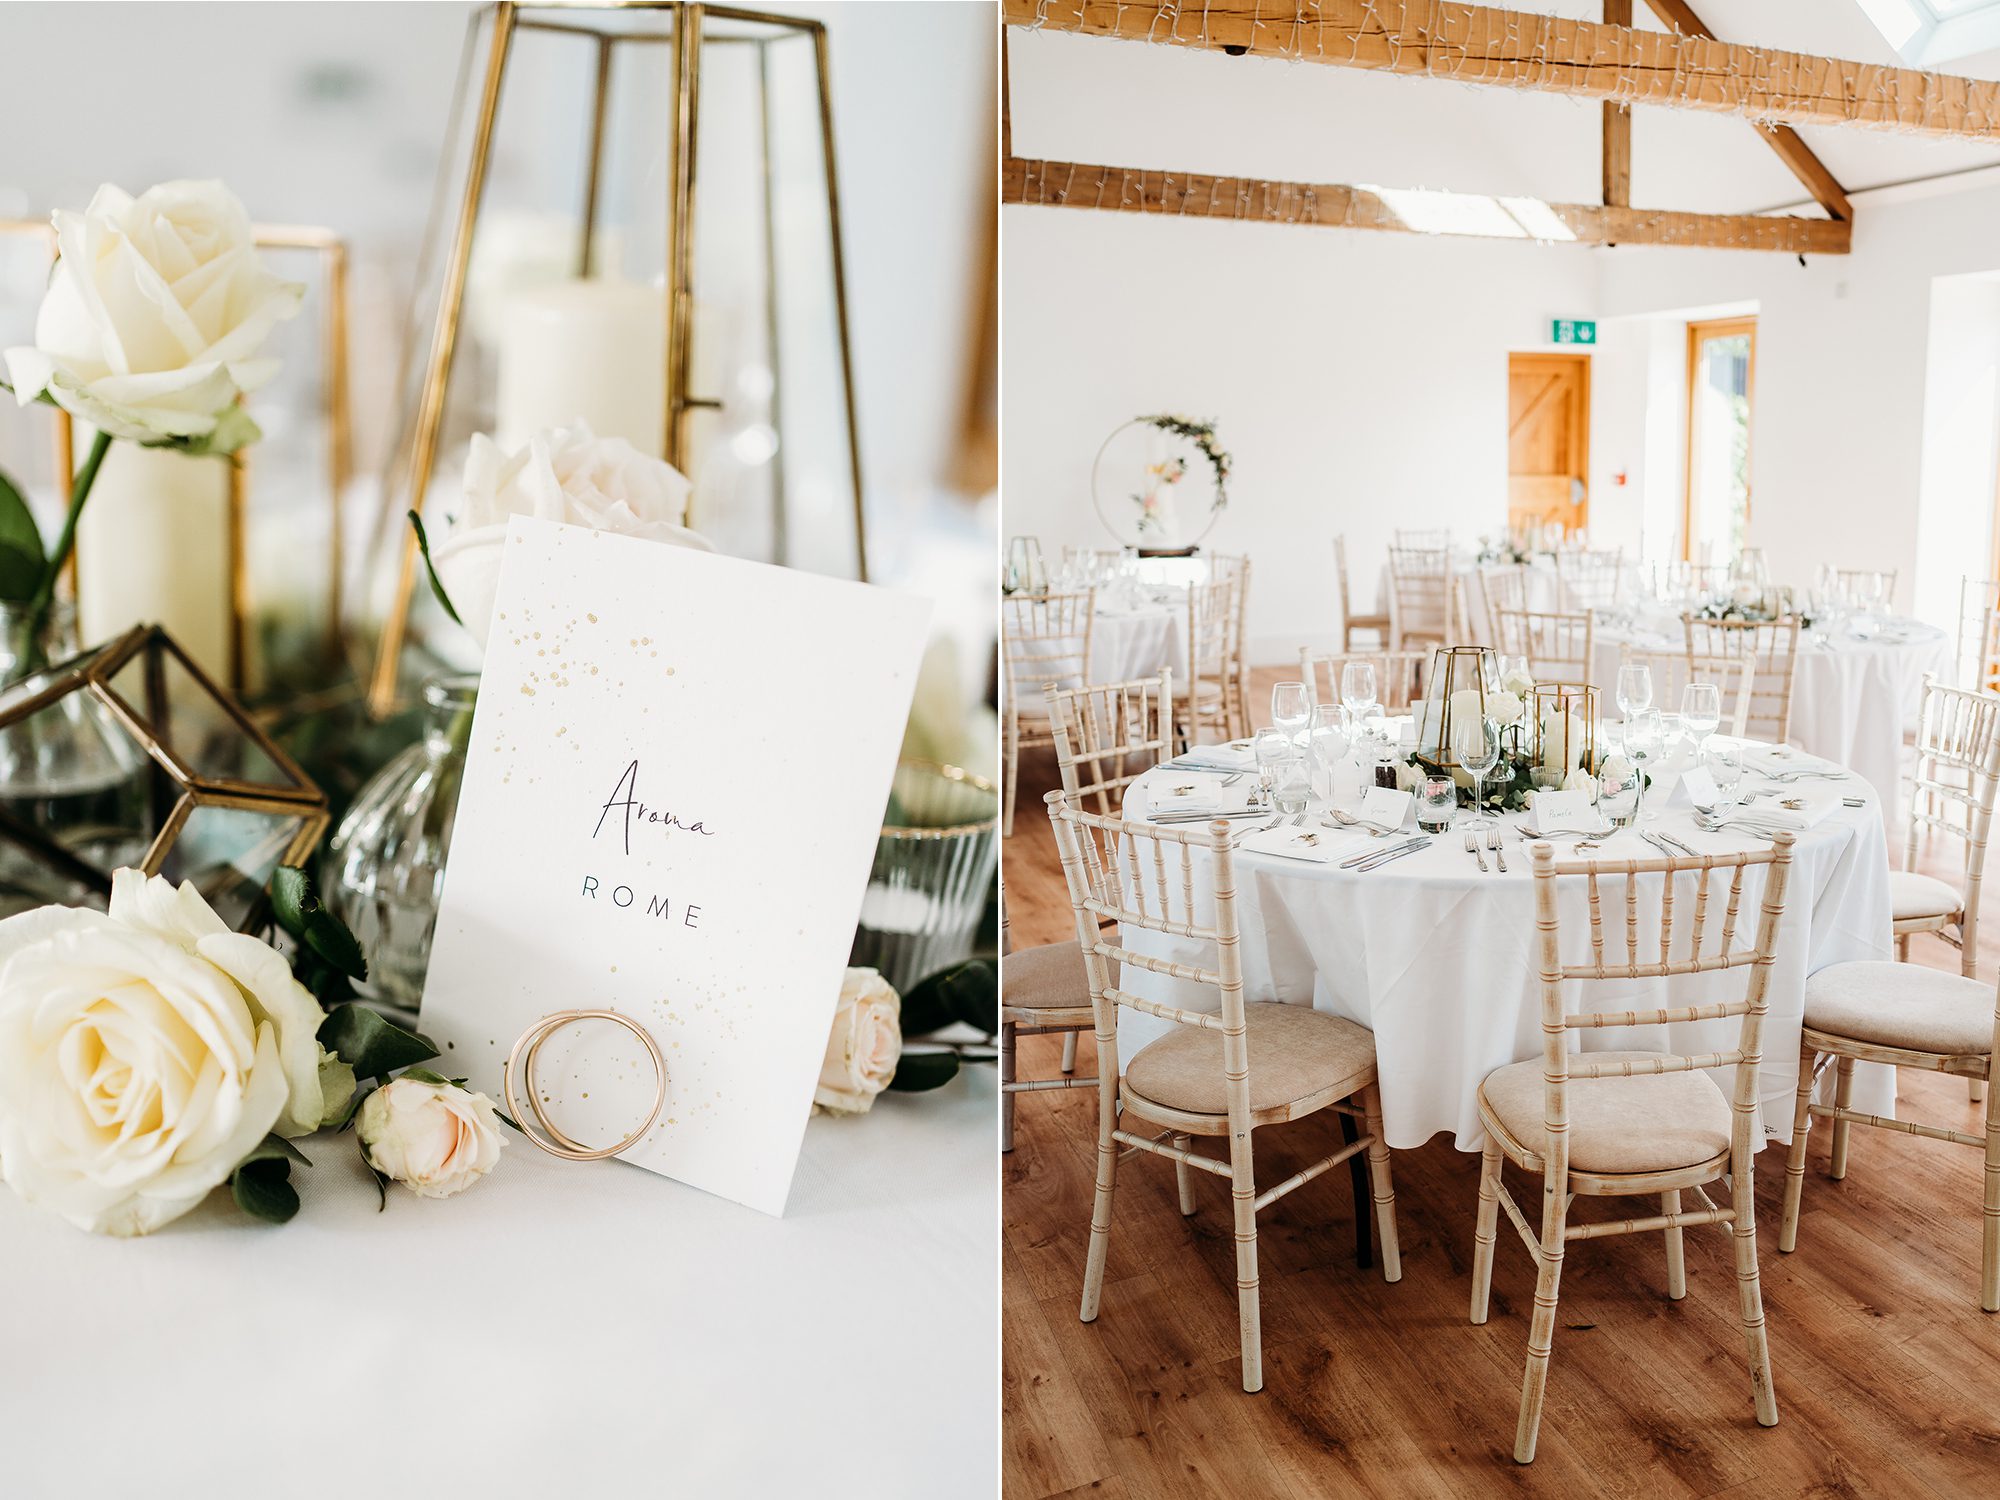 Contemporary clean wedding decor inspiration for a Kent countryside barn reception.